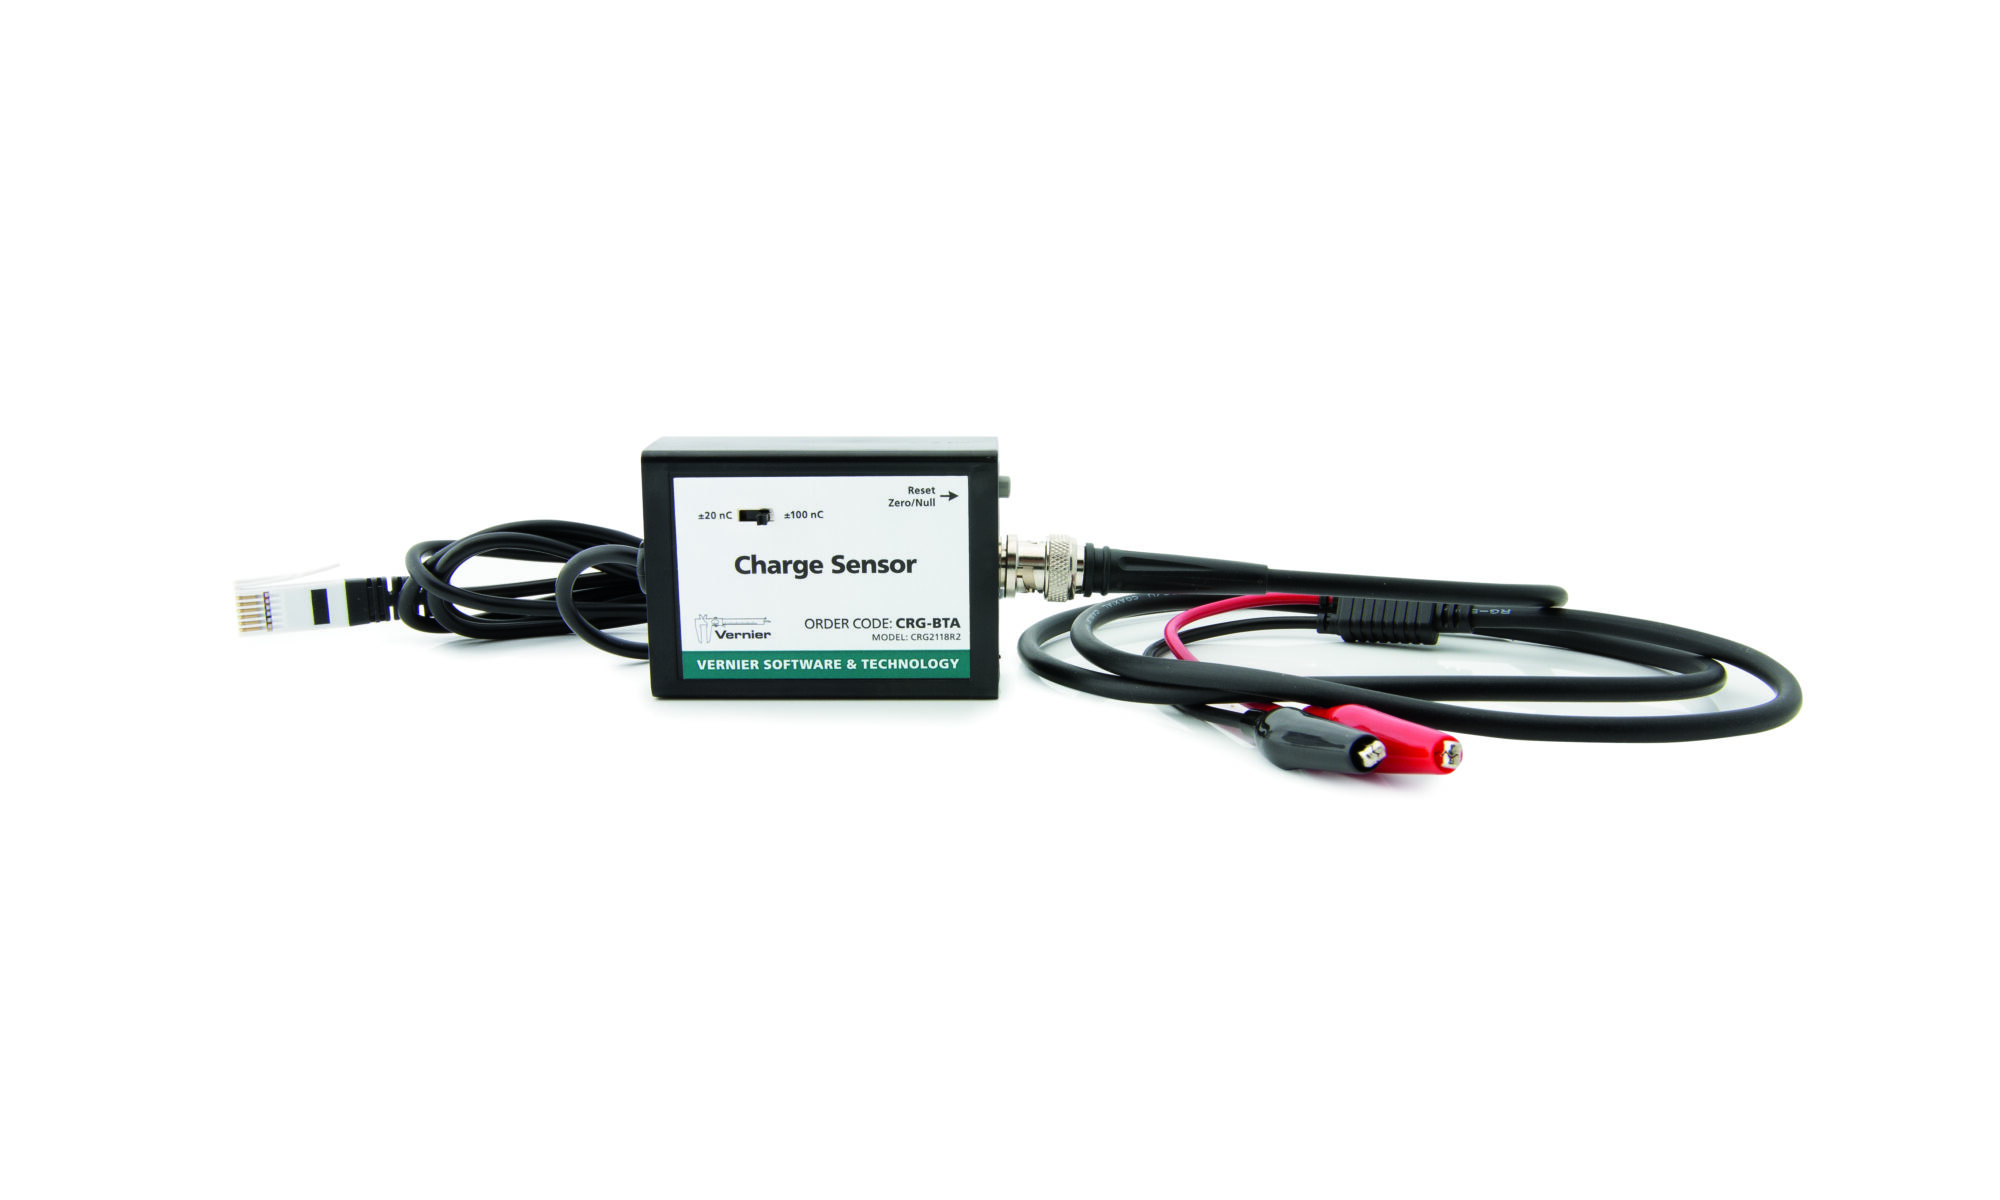 Charge sensor product image